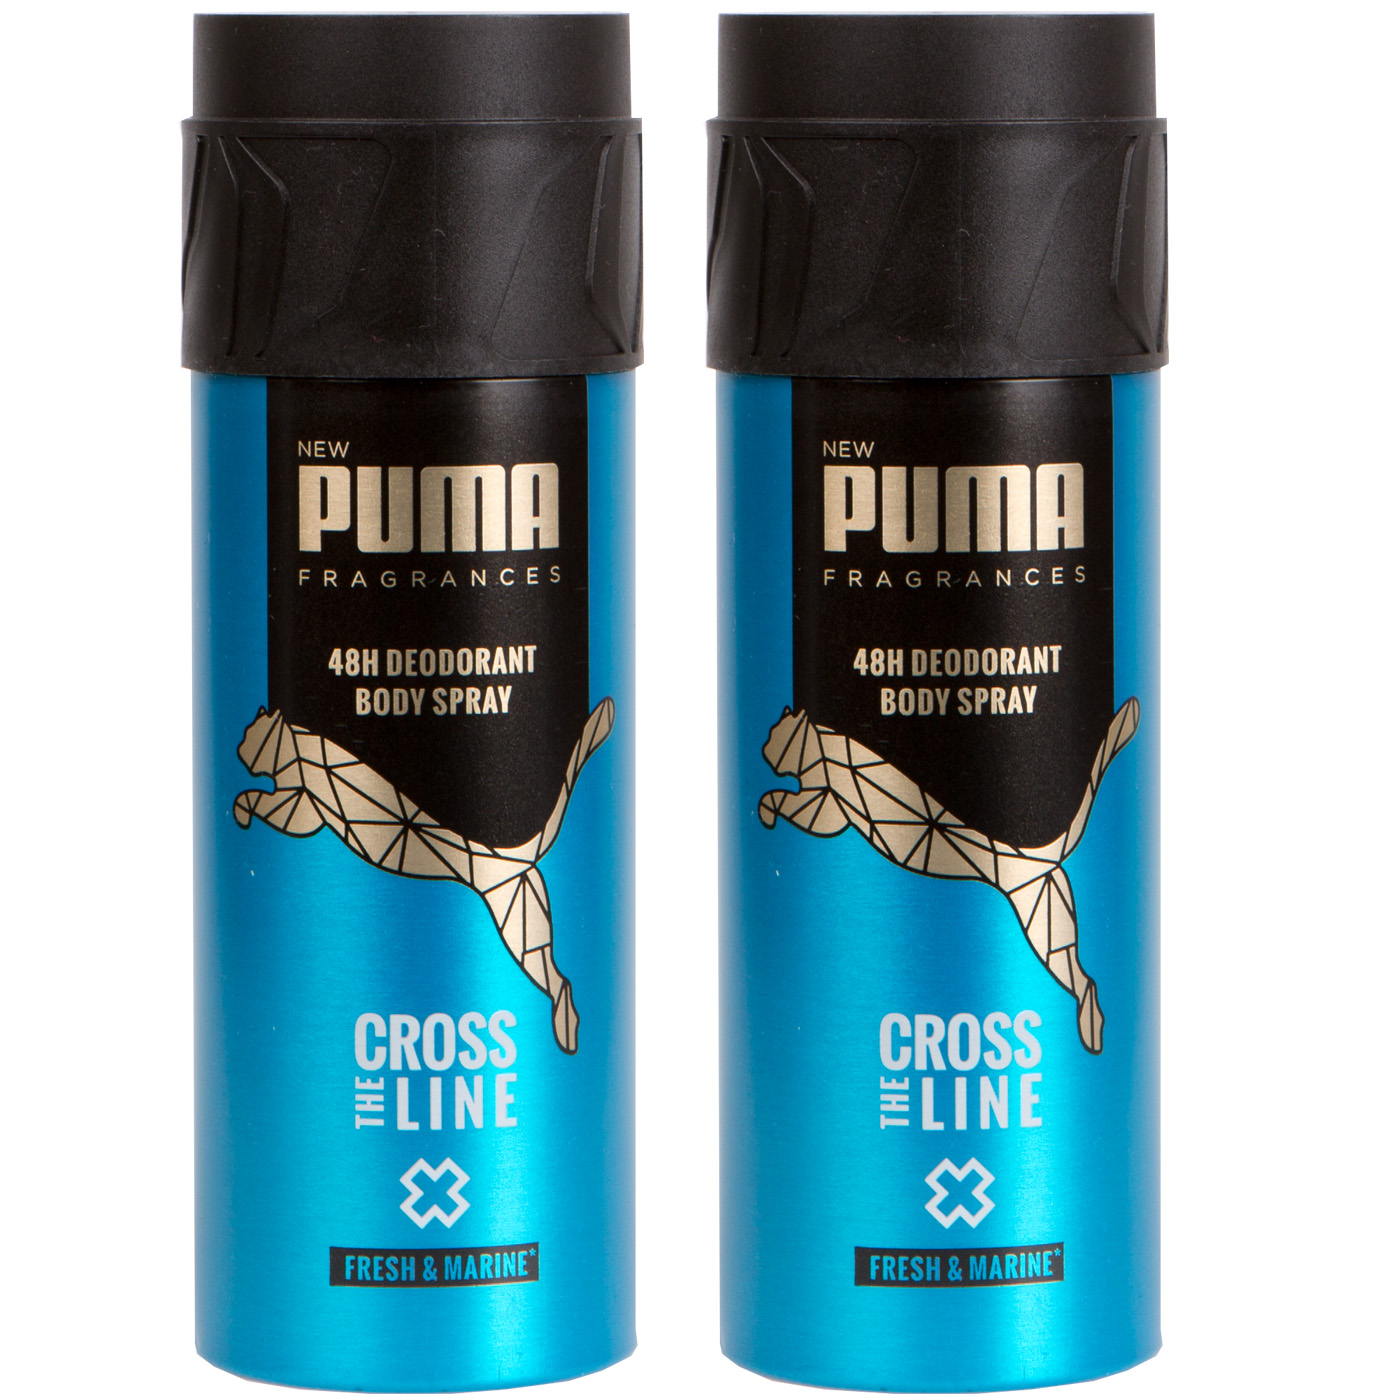 الاتحاد الروسي New Puma Fragrances Cross The Line Outlet Store, UP TO 64% OFF ... الاتحاد الروسي